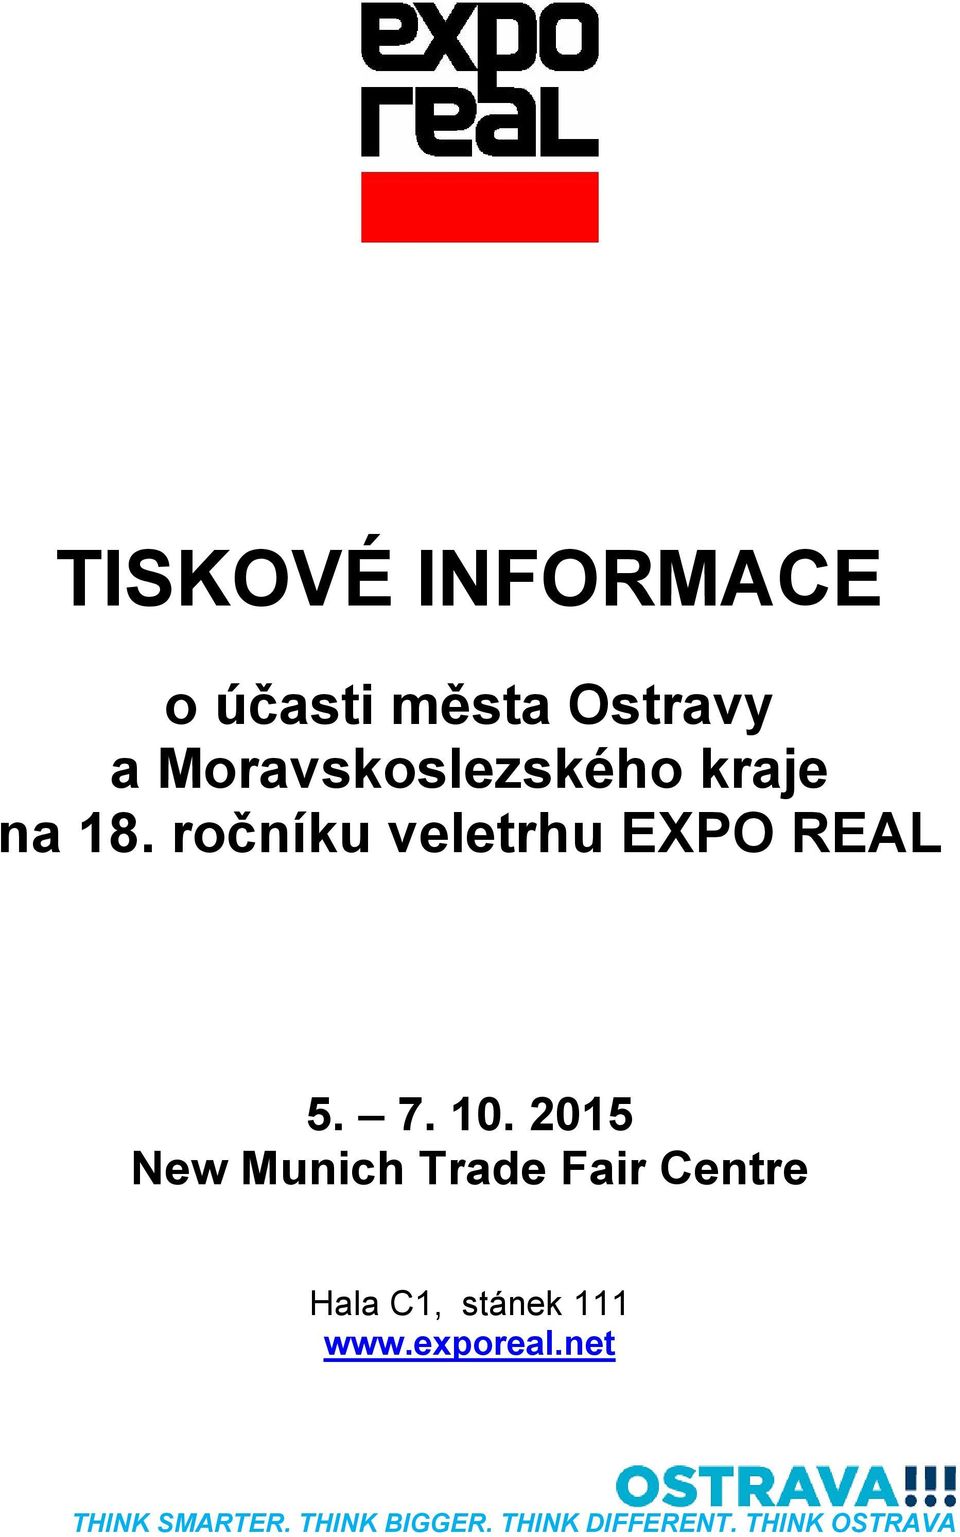 2015 New Munich Trade Fair Centre Hala C1, stánek 111 www.